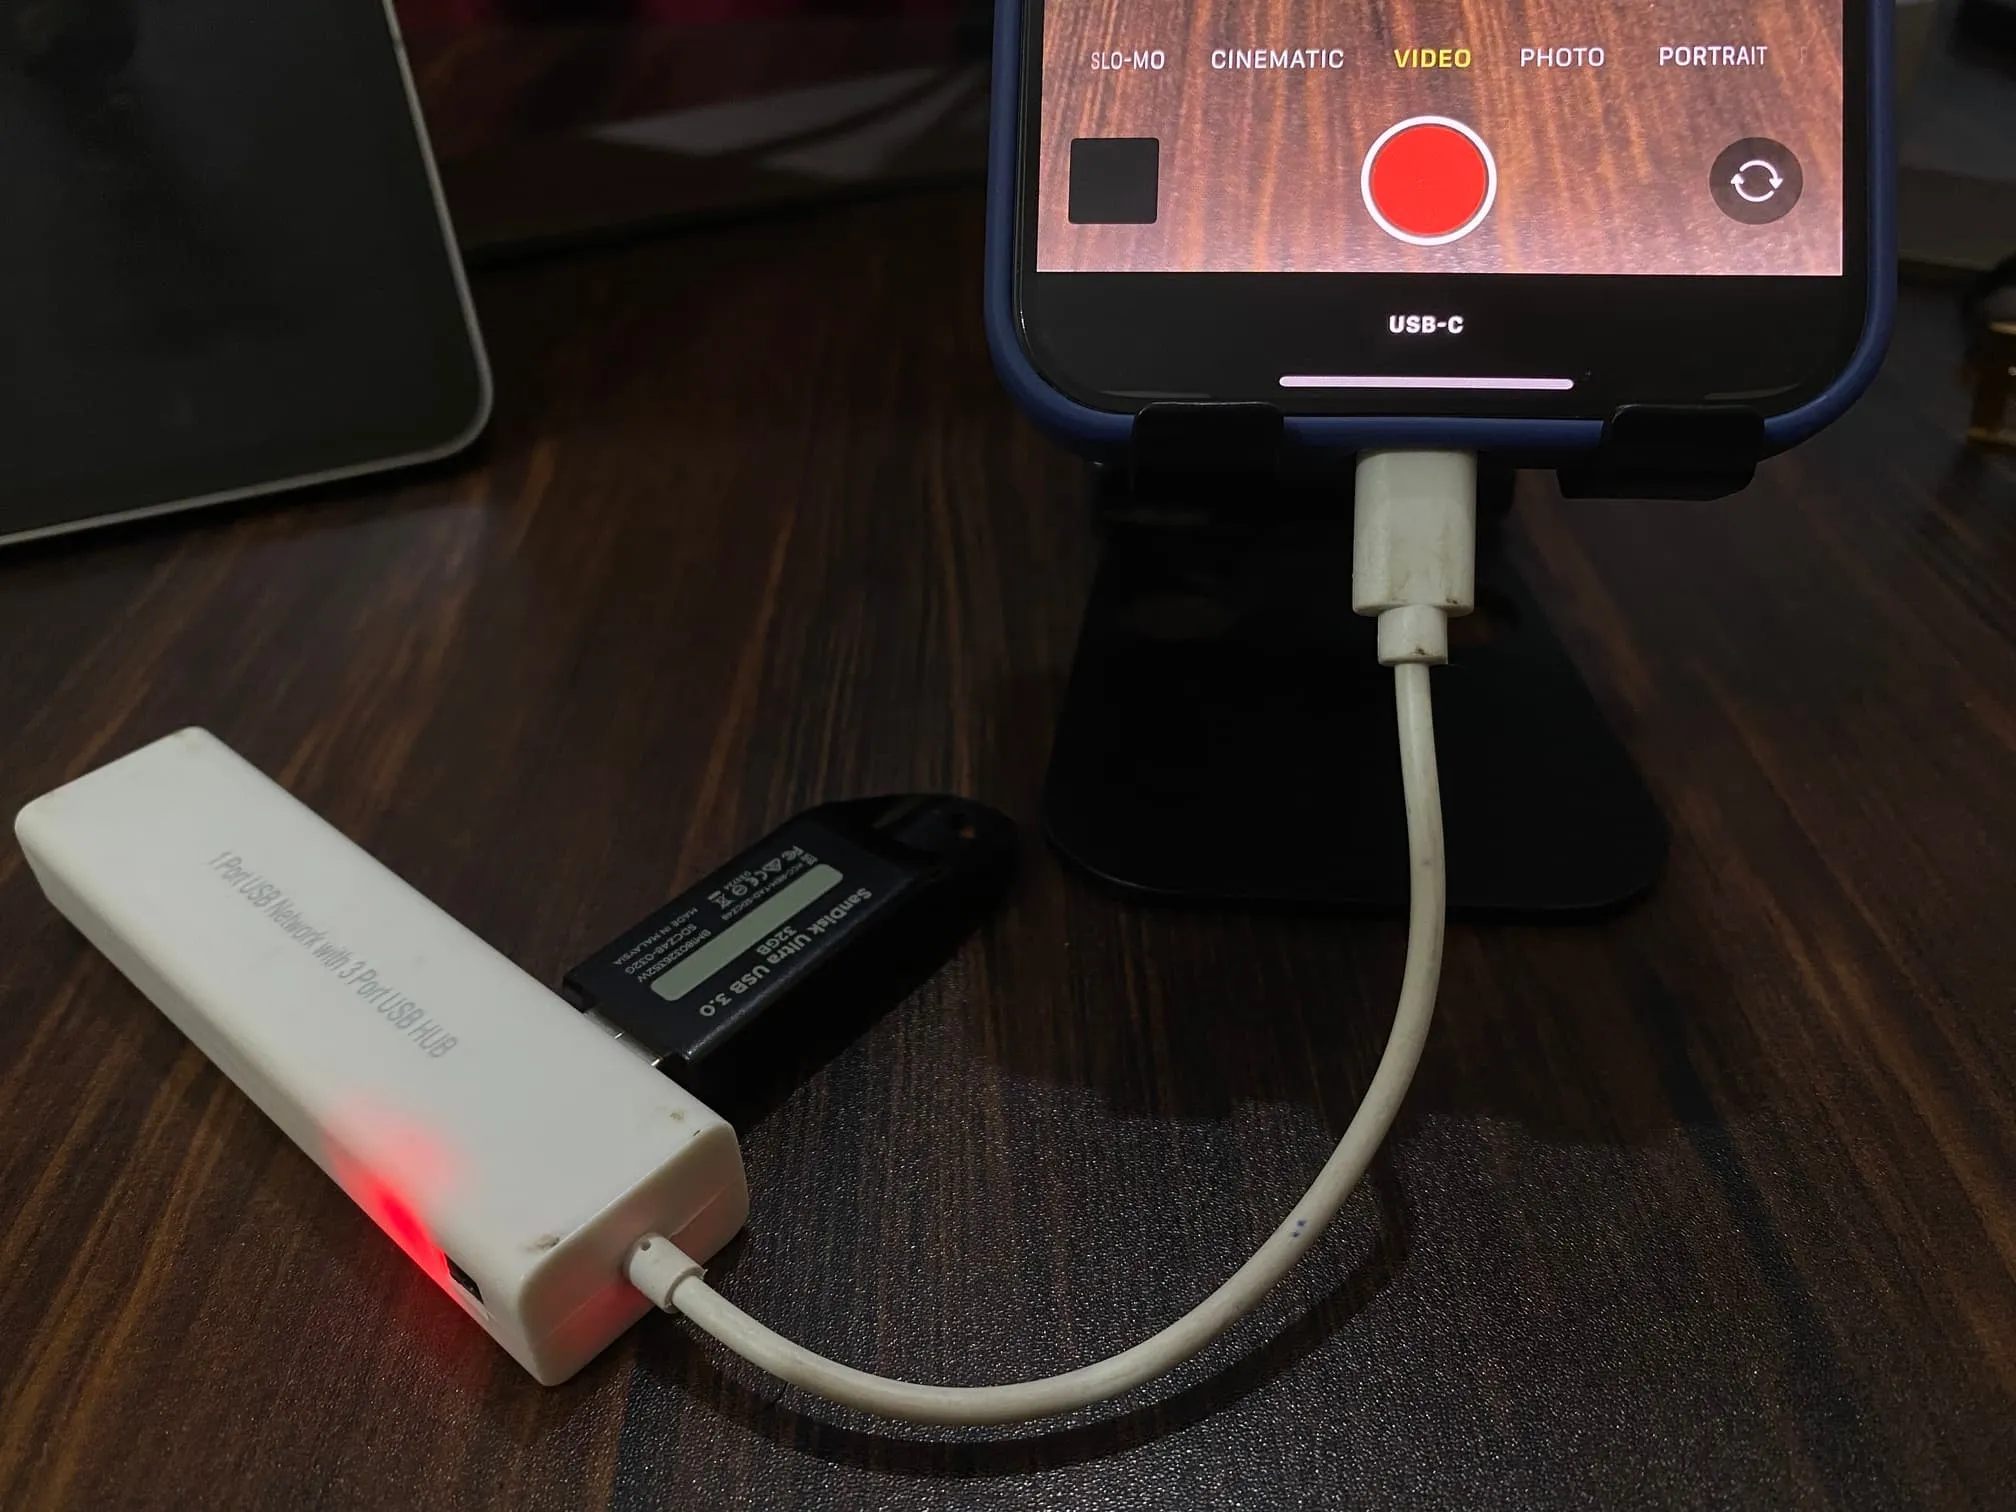 USB-C 동글을 통해 iPhone에 연결된 USB 펜 드라이브